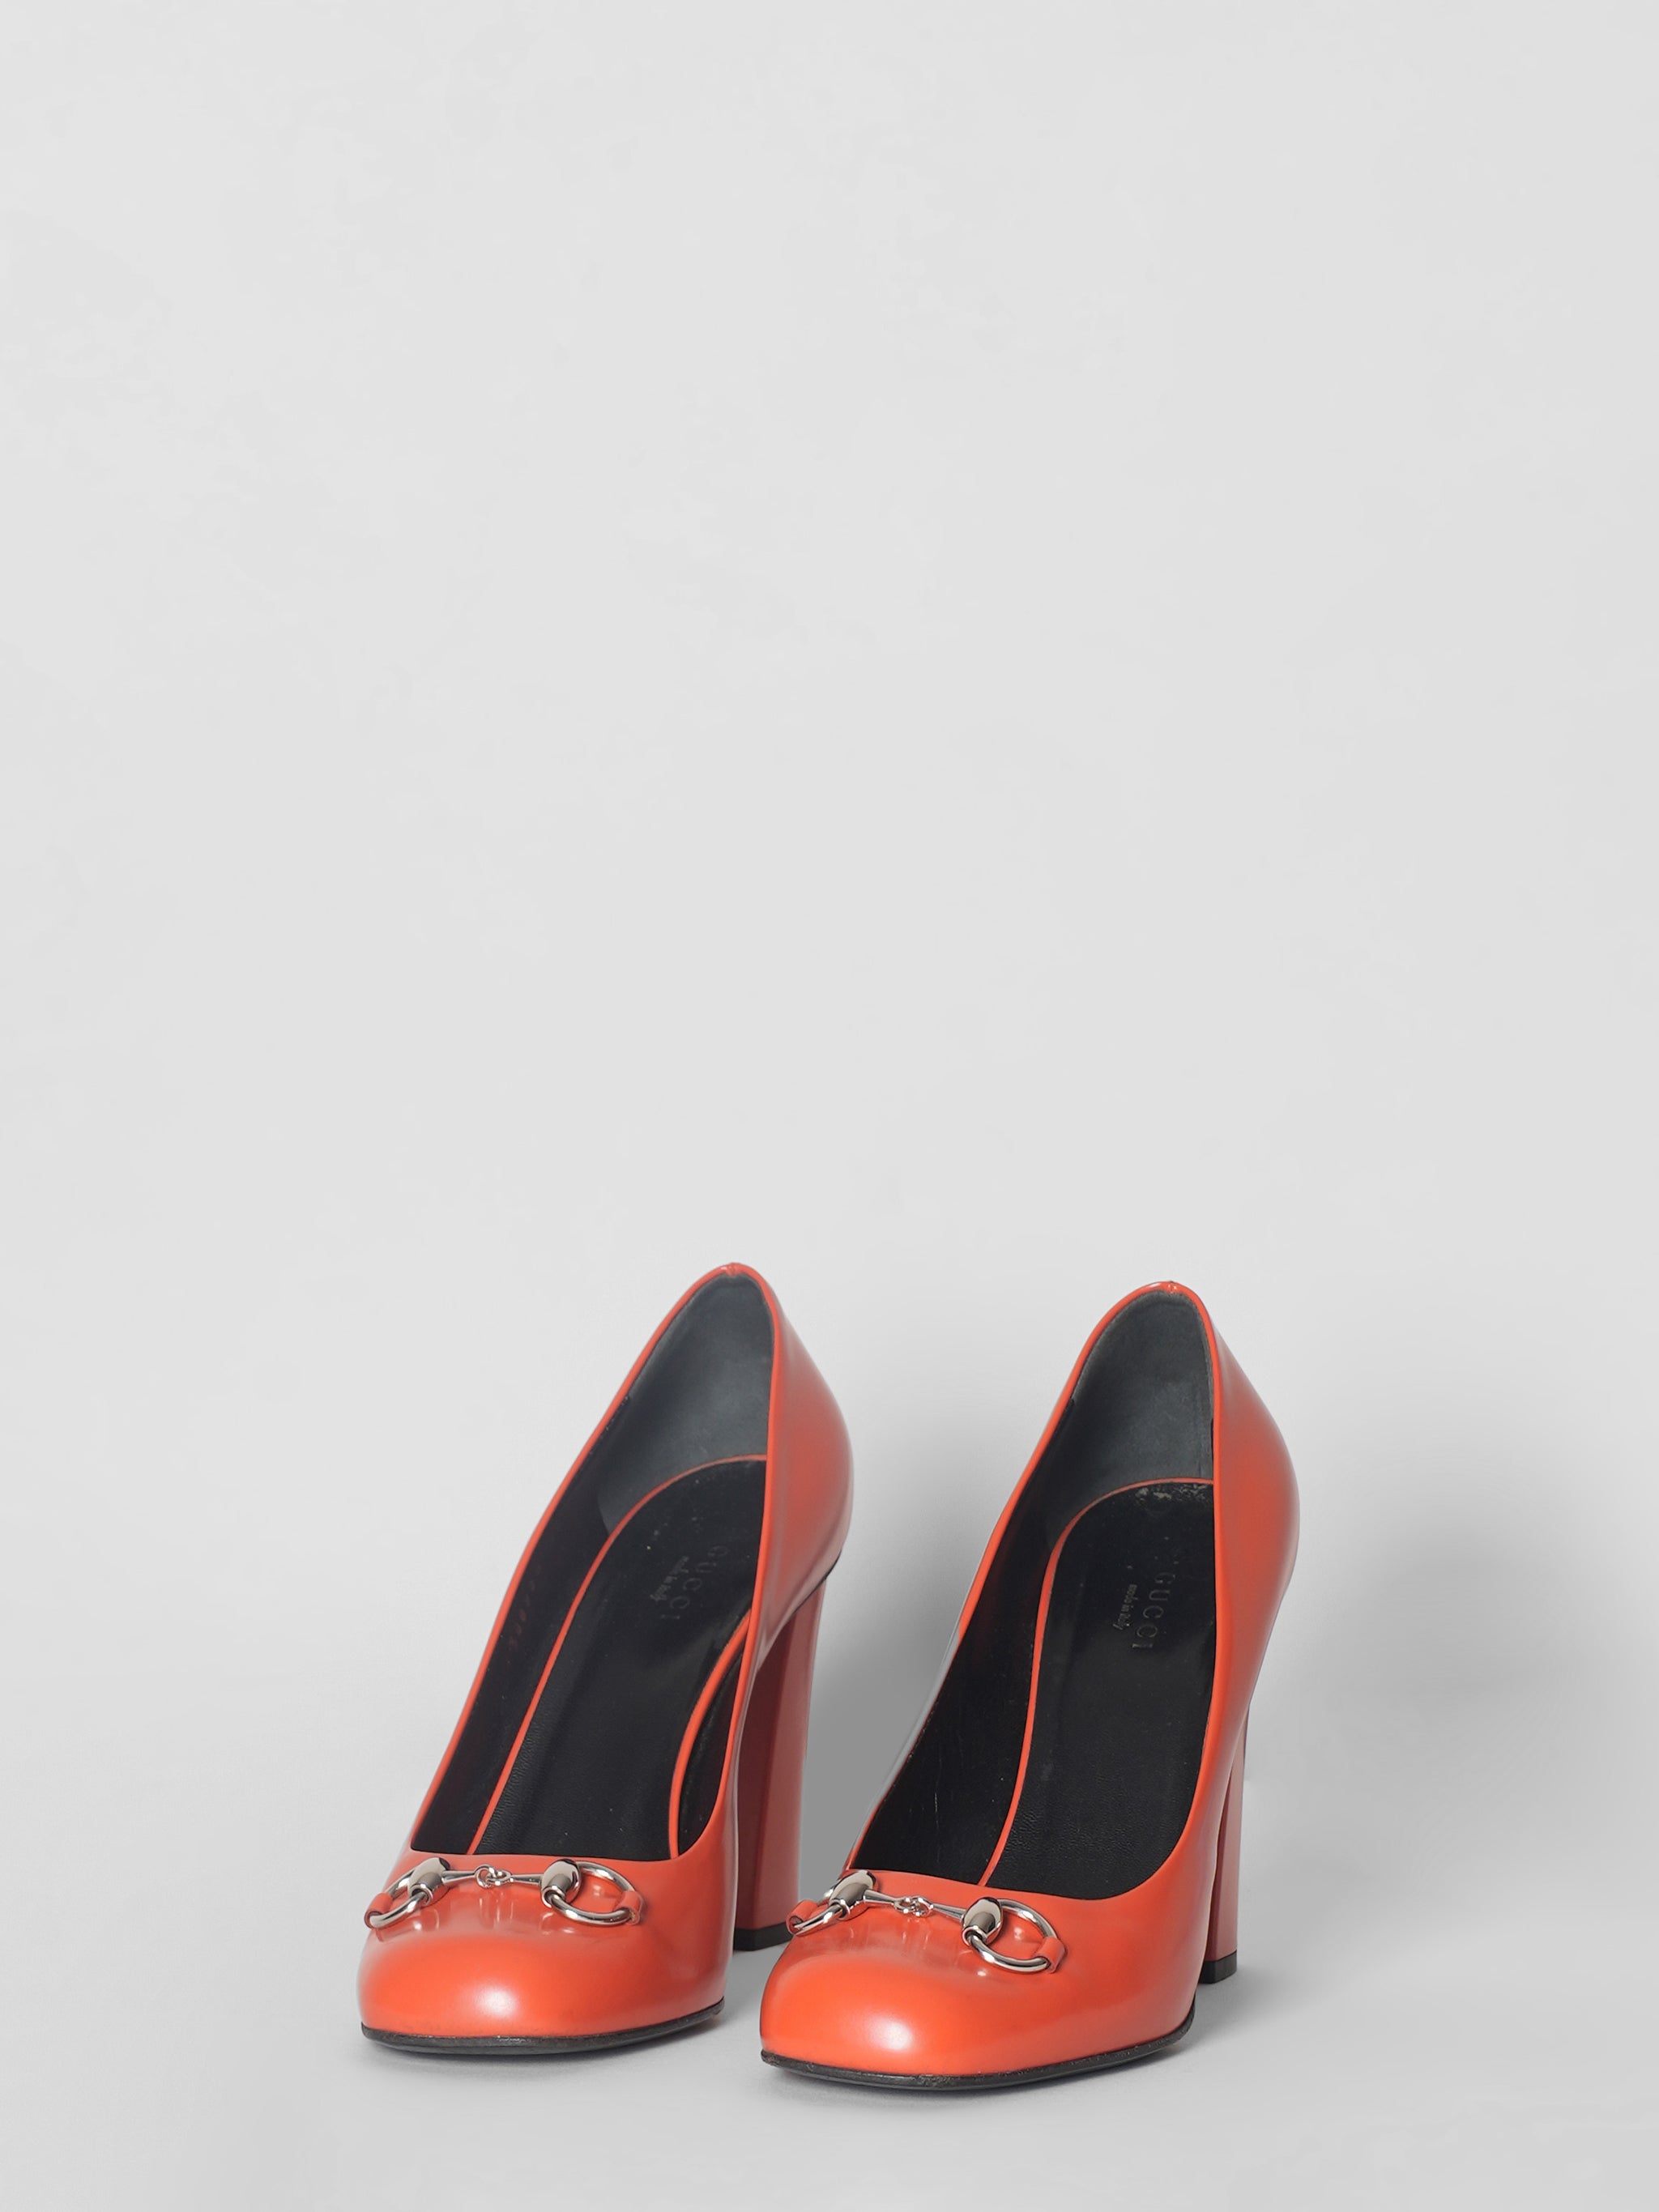 Gucci Horsebit Orange Block Heels